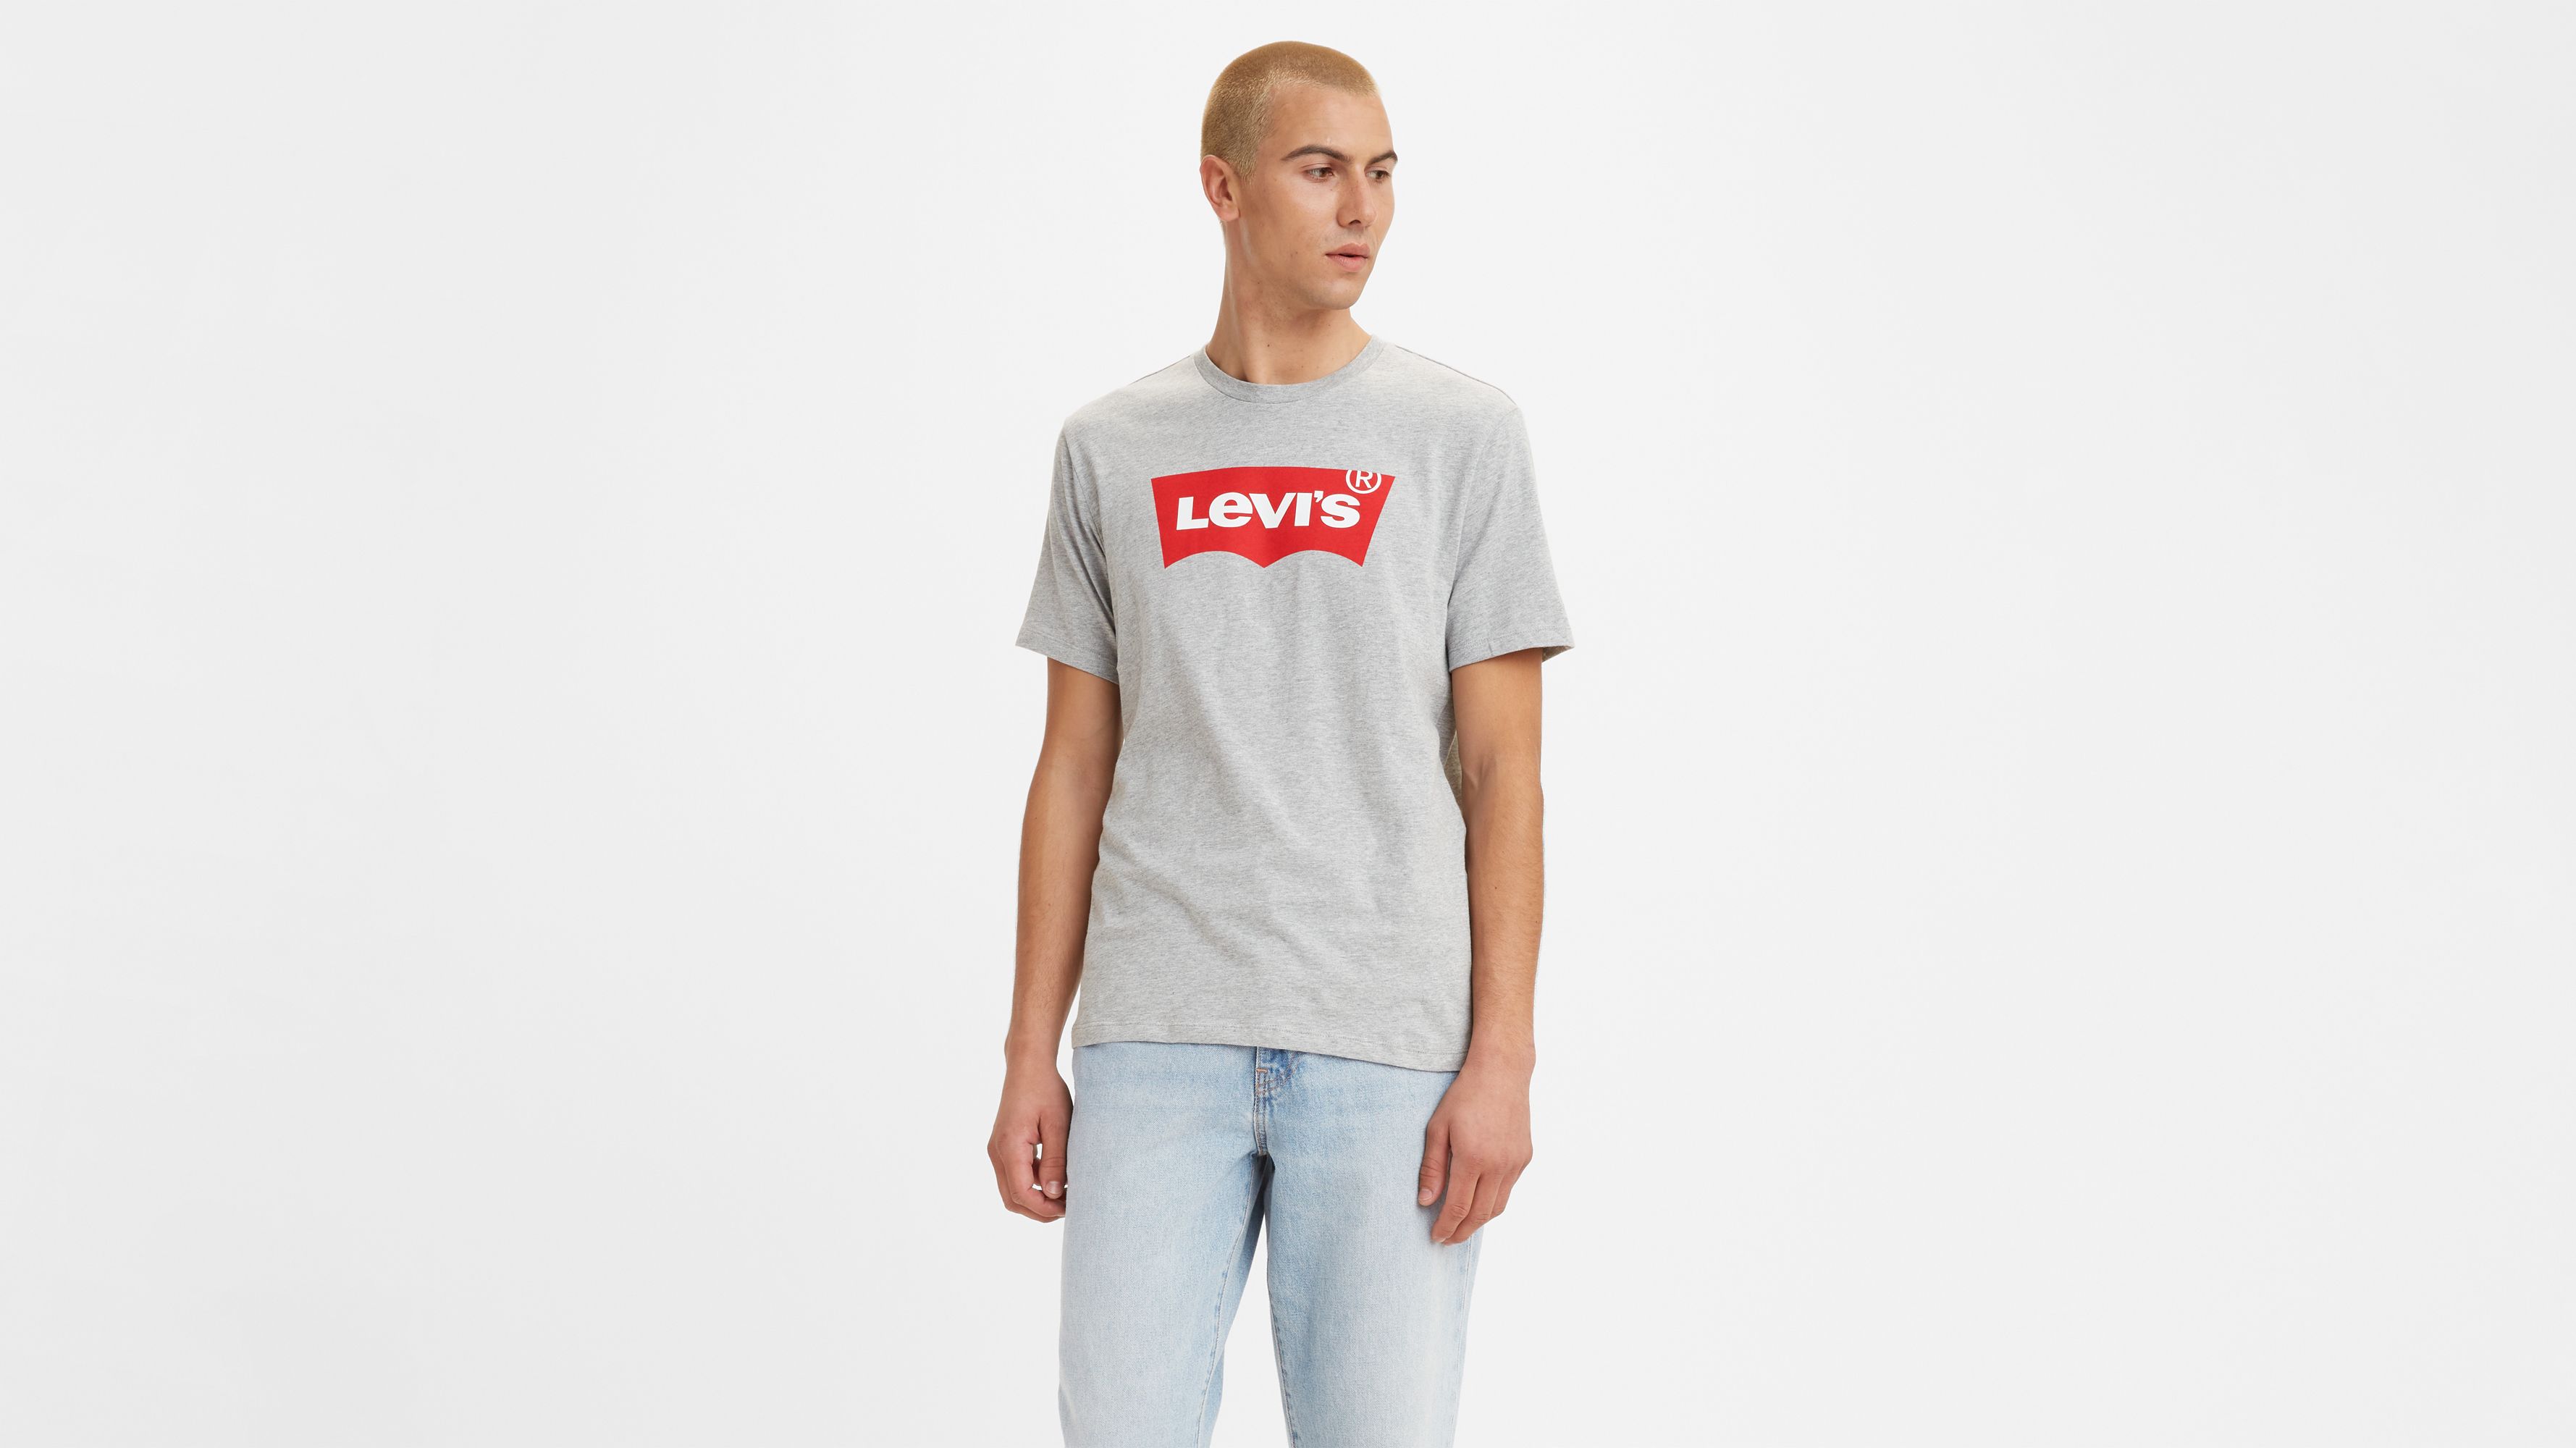 levis shirts